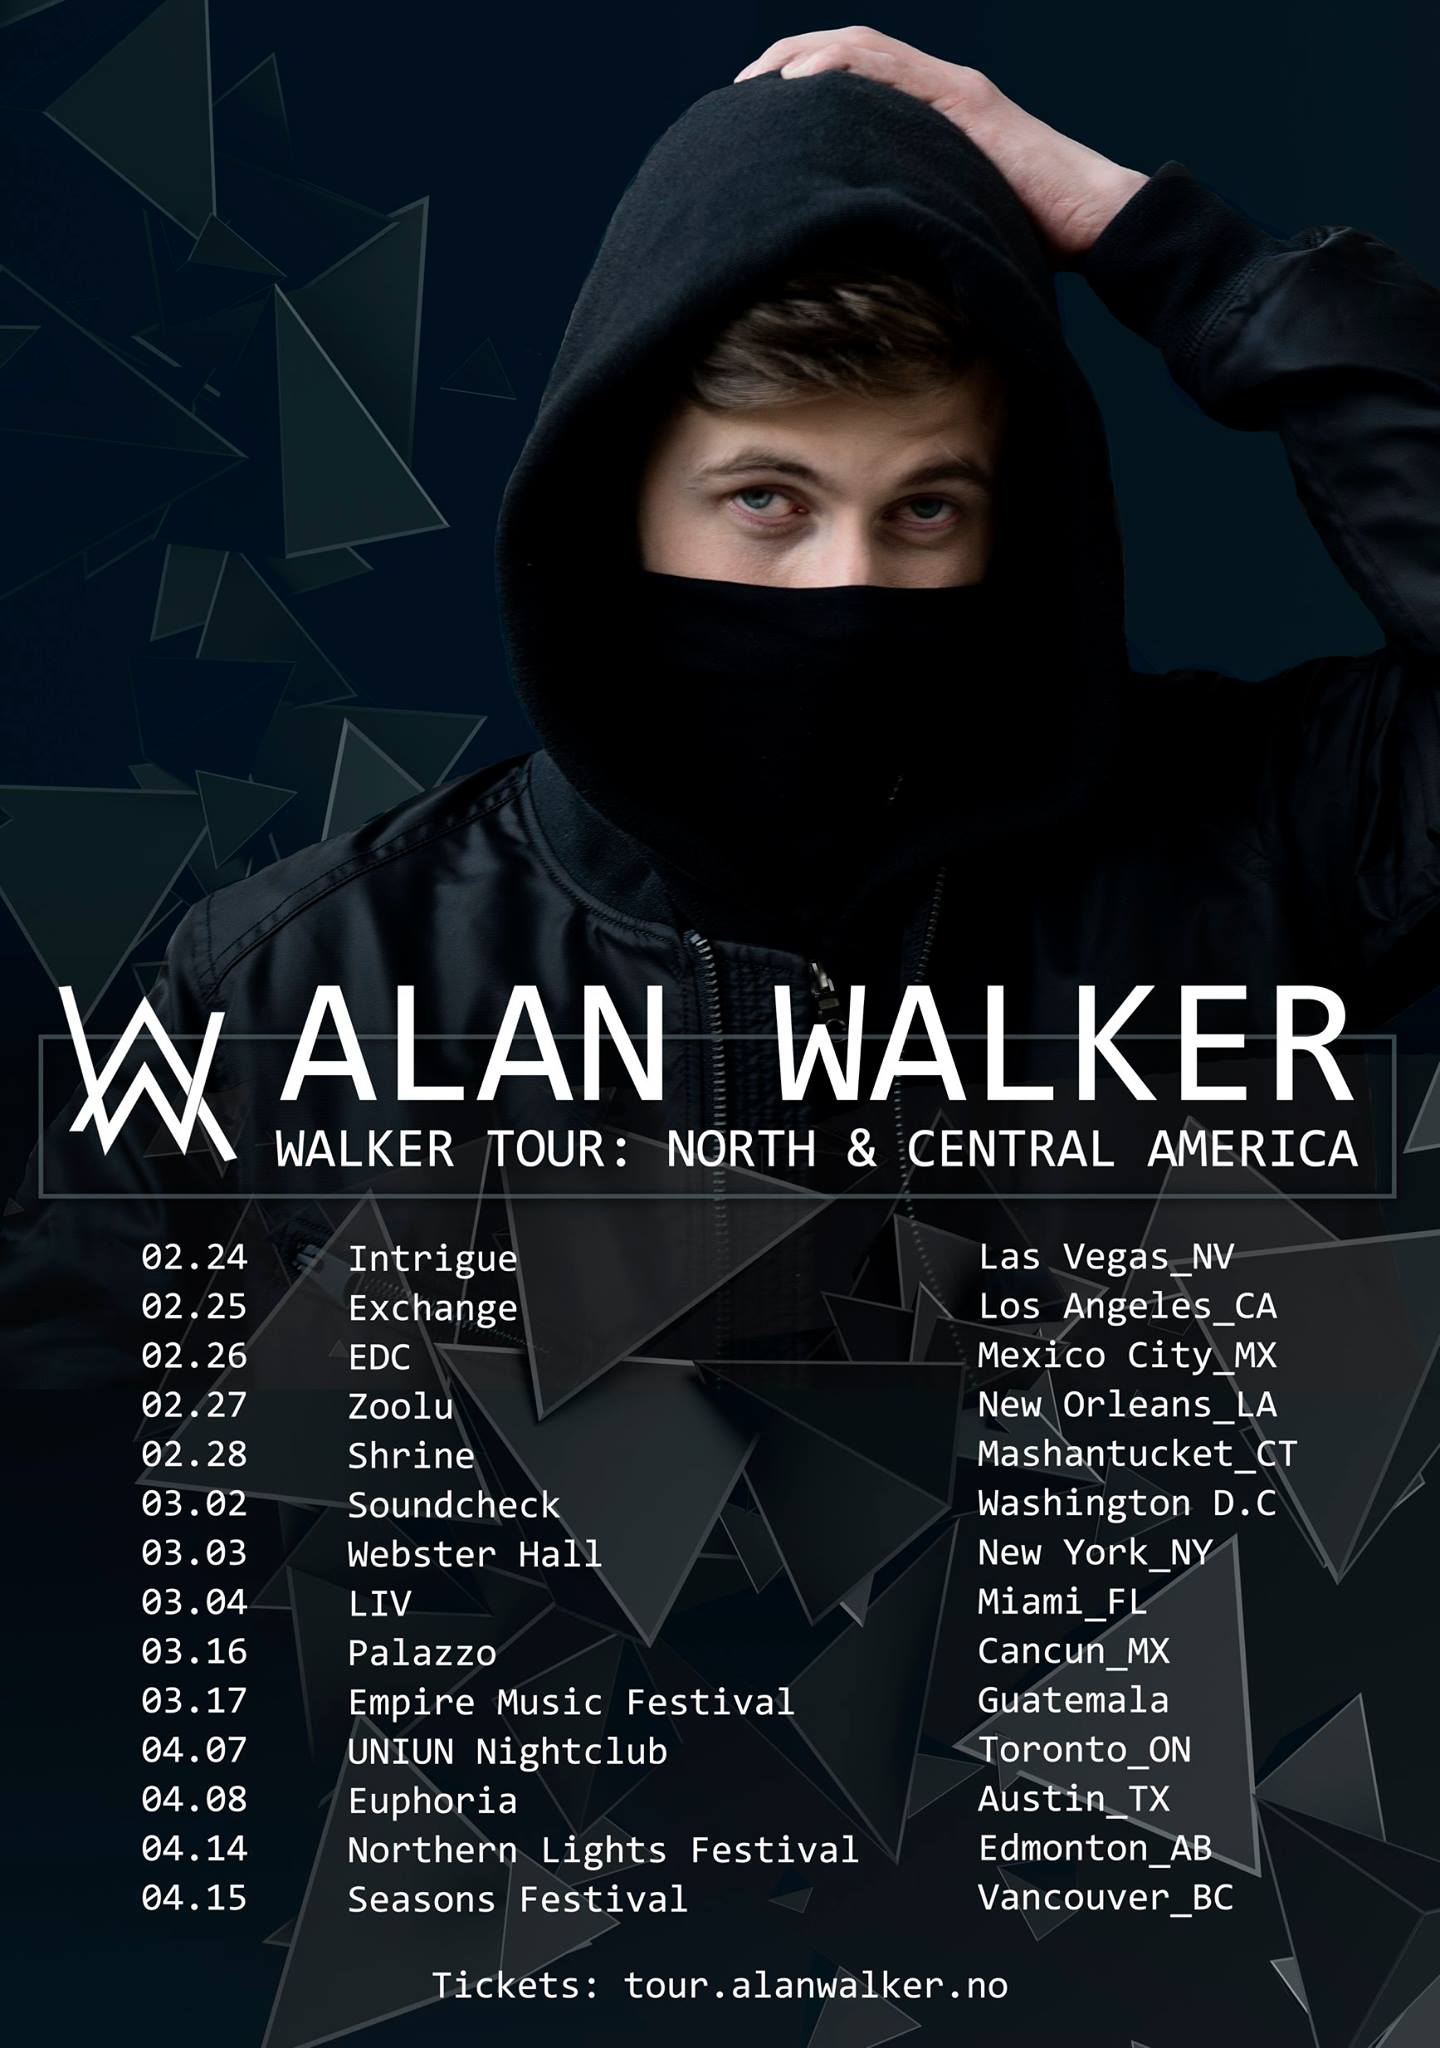 Alan Walker releases instrumental remix for “Alone” & announces